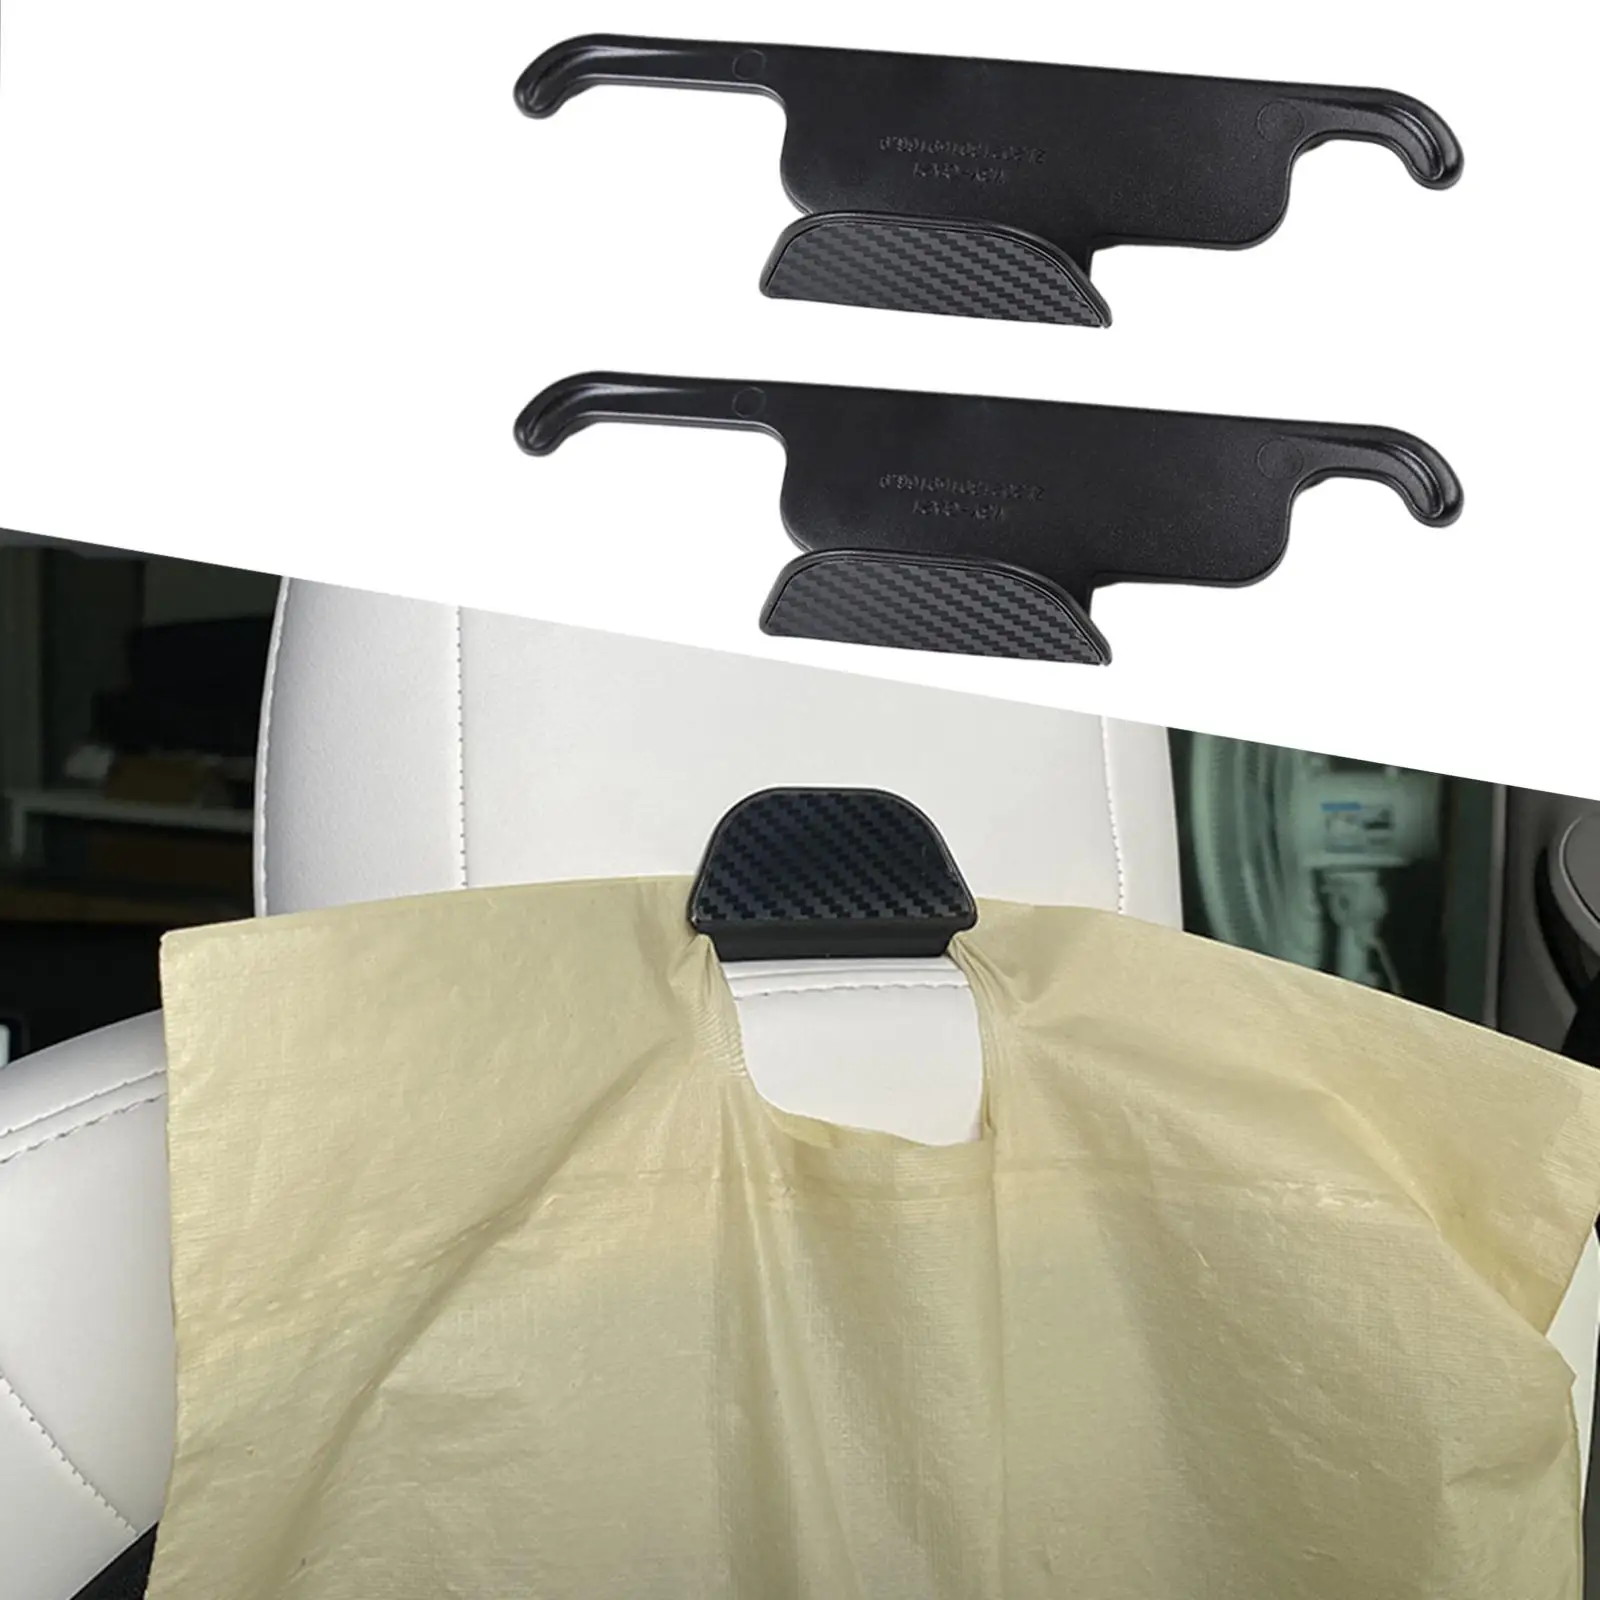 2x Car Seat Hook Hanger Seat Headrest Bag Holder Fit for Tesla Model 3 Y Parts Replacement